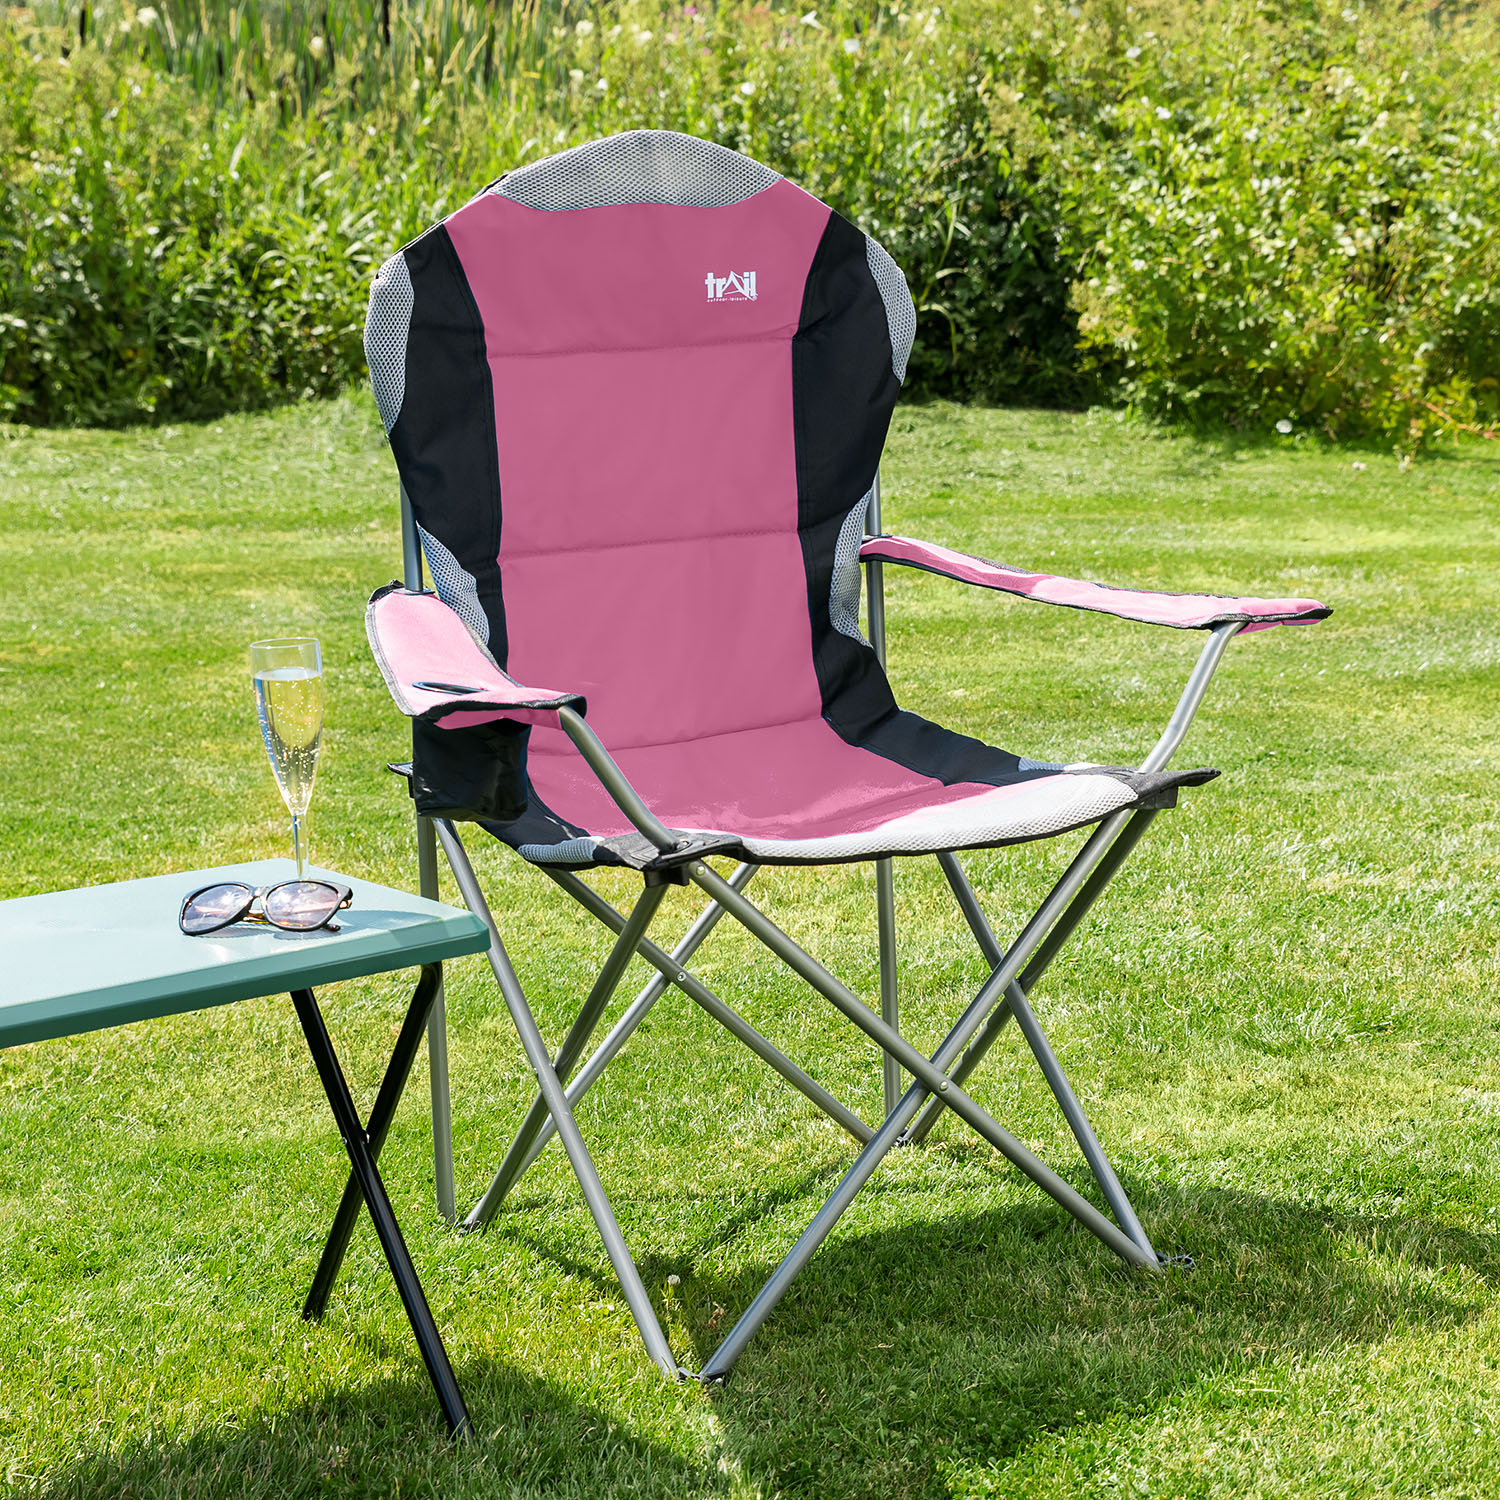 Folding Camping Chairs Chair Outdoor Garden Portable Hiking Fishing Chair UK 